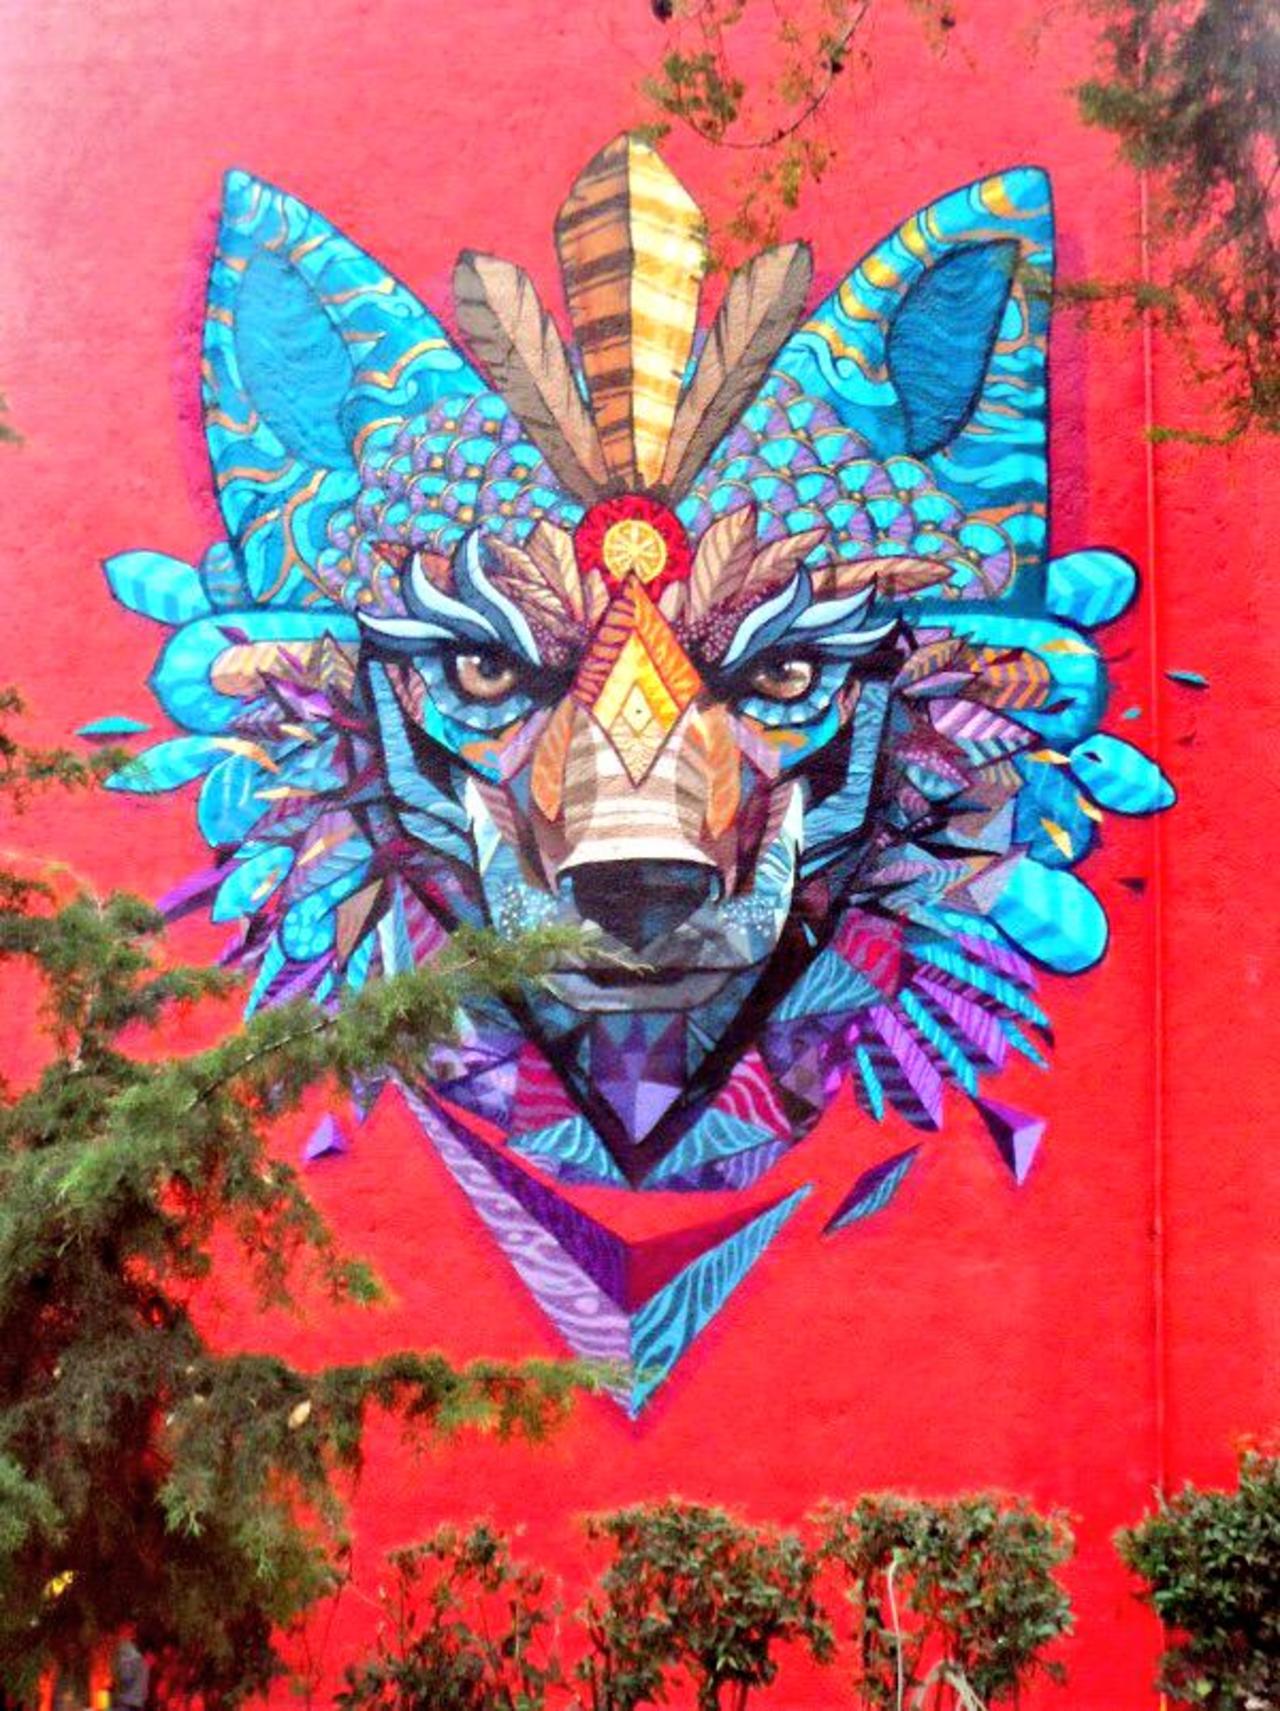 Farid Rueda
Mexico
#streetart #art #graffiti #mural http://t.co/QJ7tdOOSyX